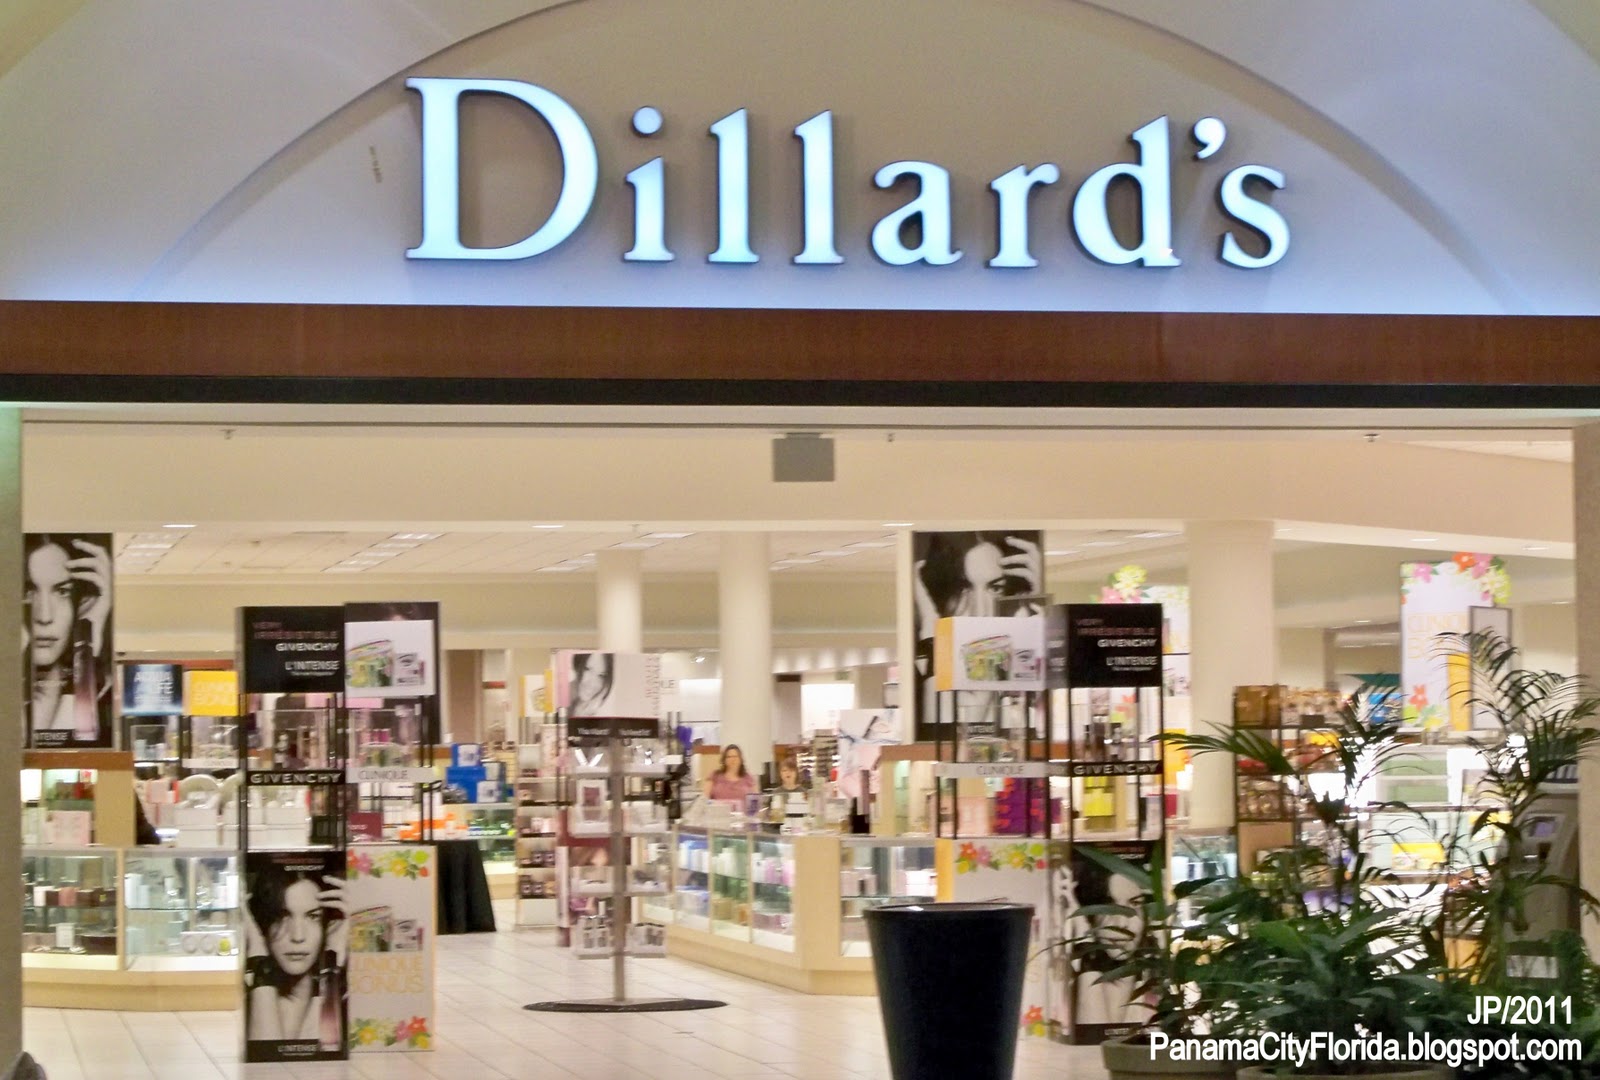 1600 x 1080 Â· 247 kB Â· jpeg, Dillard's Stores Florida source: http ...